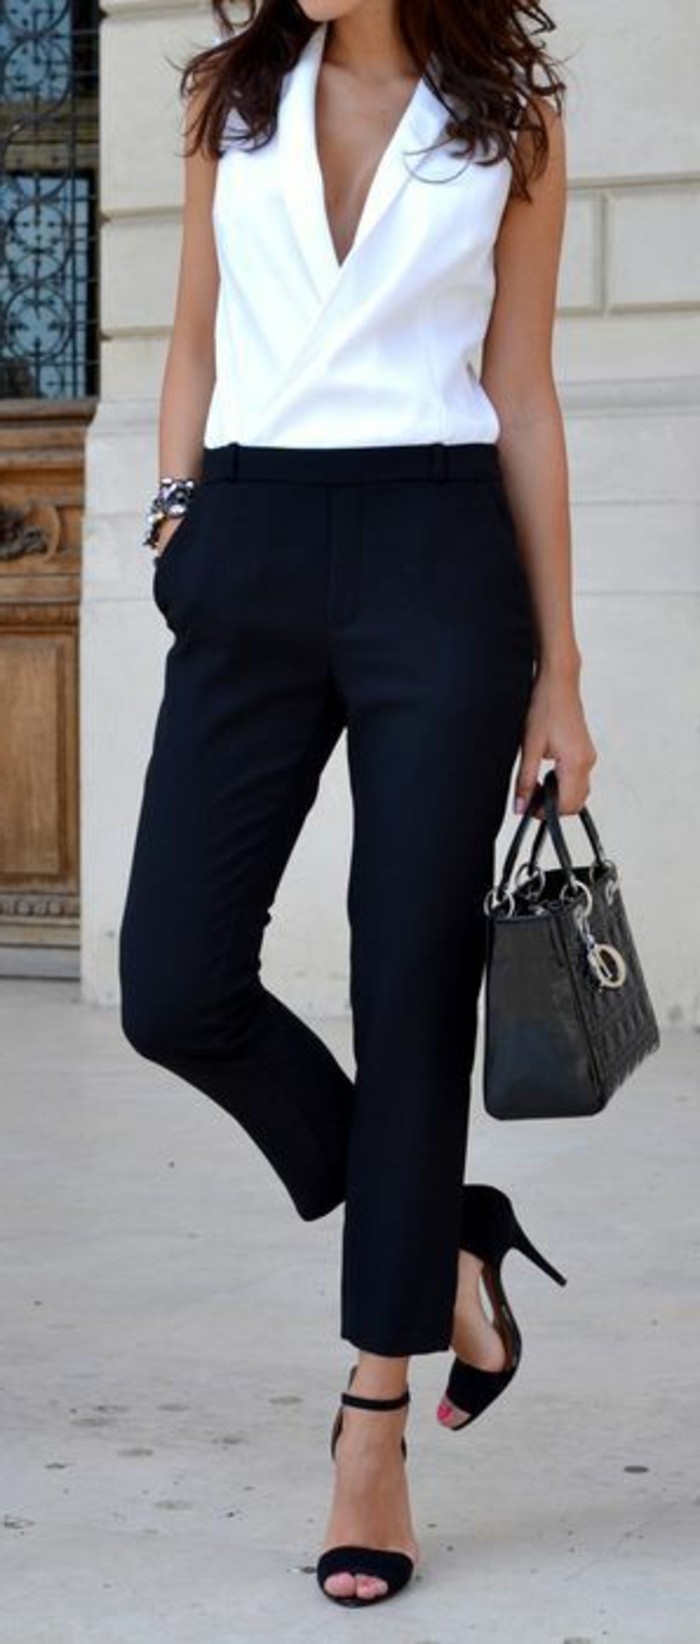 business-kleider-elegante-wei%C3%9Fe-bluse-moderne-schwarze-hose-schwarze-tasche-hohe-schwarze-schuhe-1.jpg